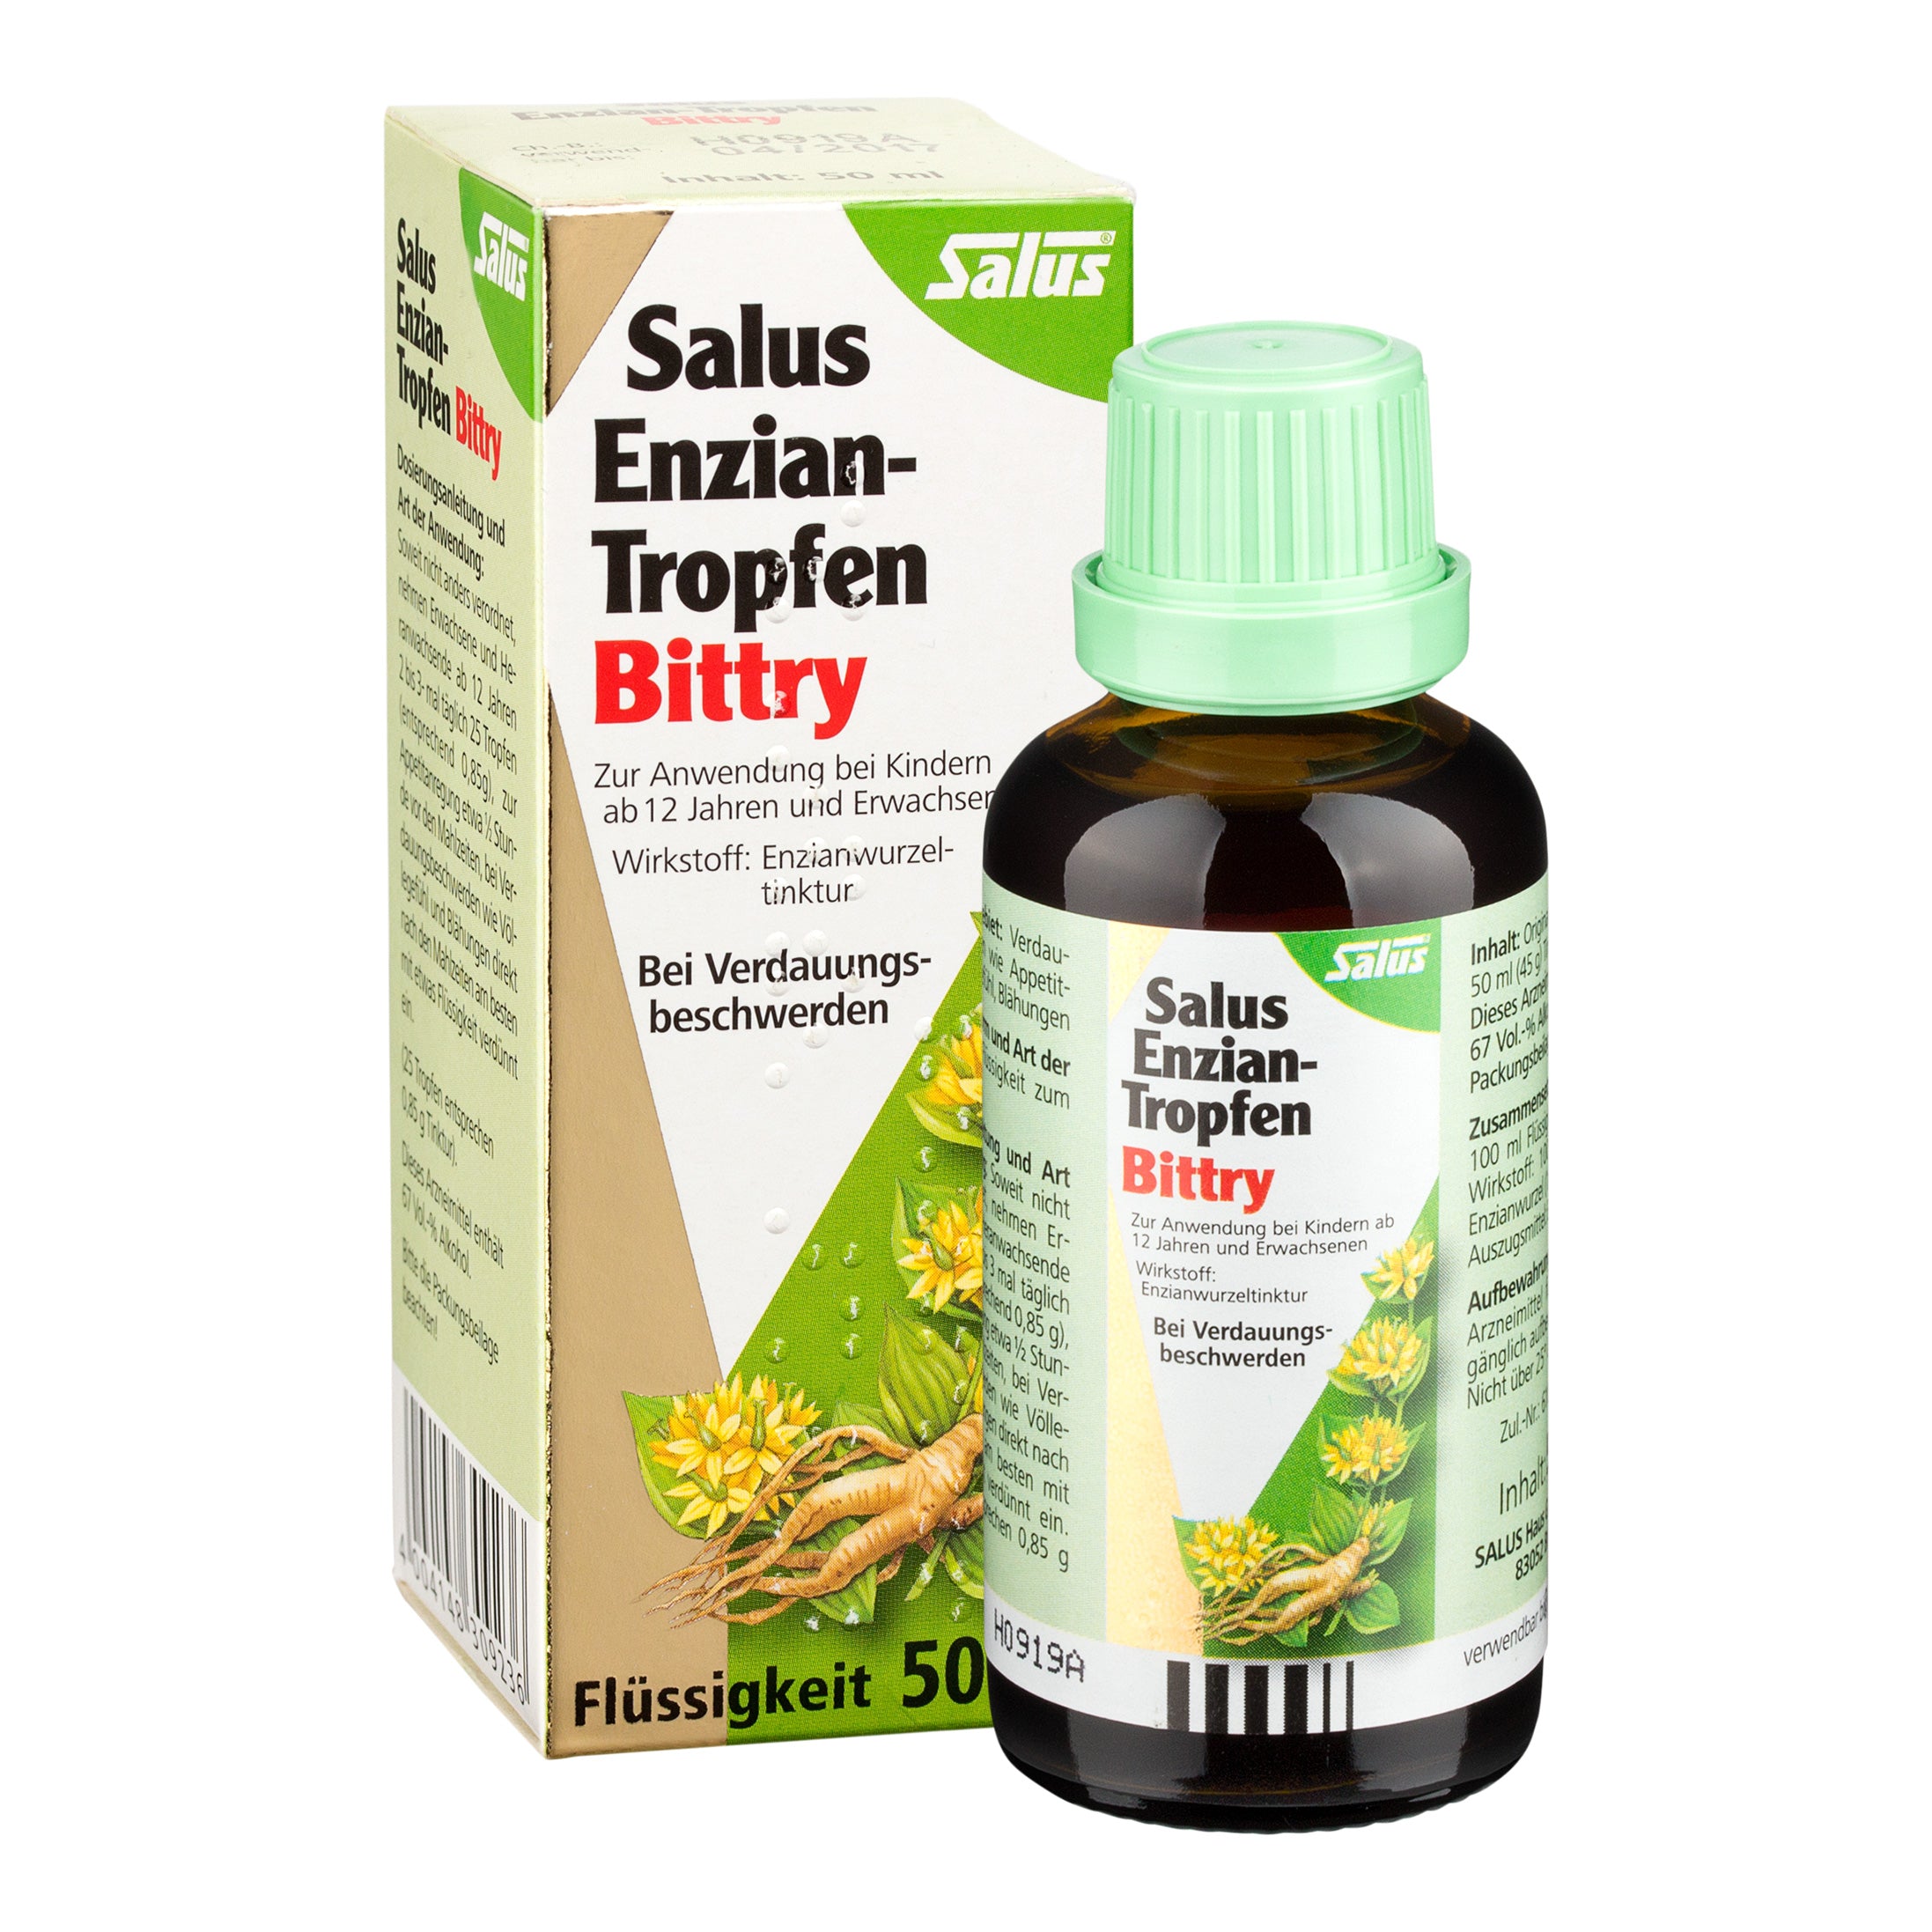 Salus Bio Enzian-Tropfen Bittry